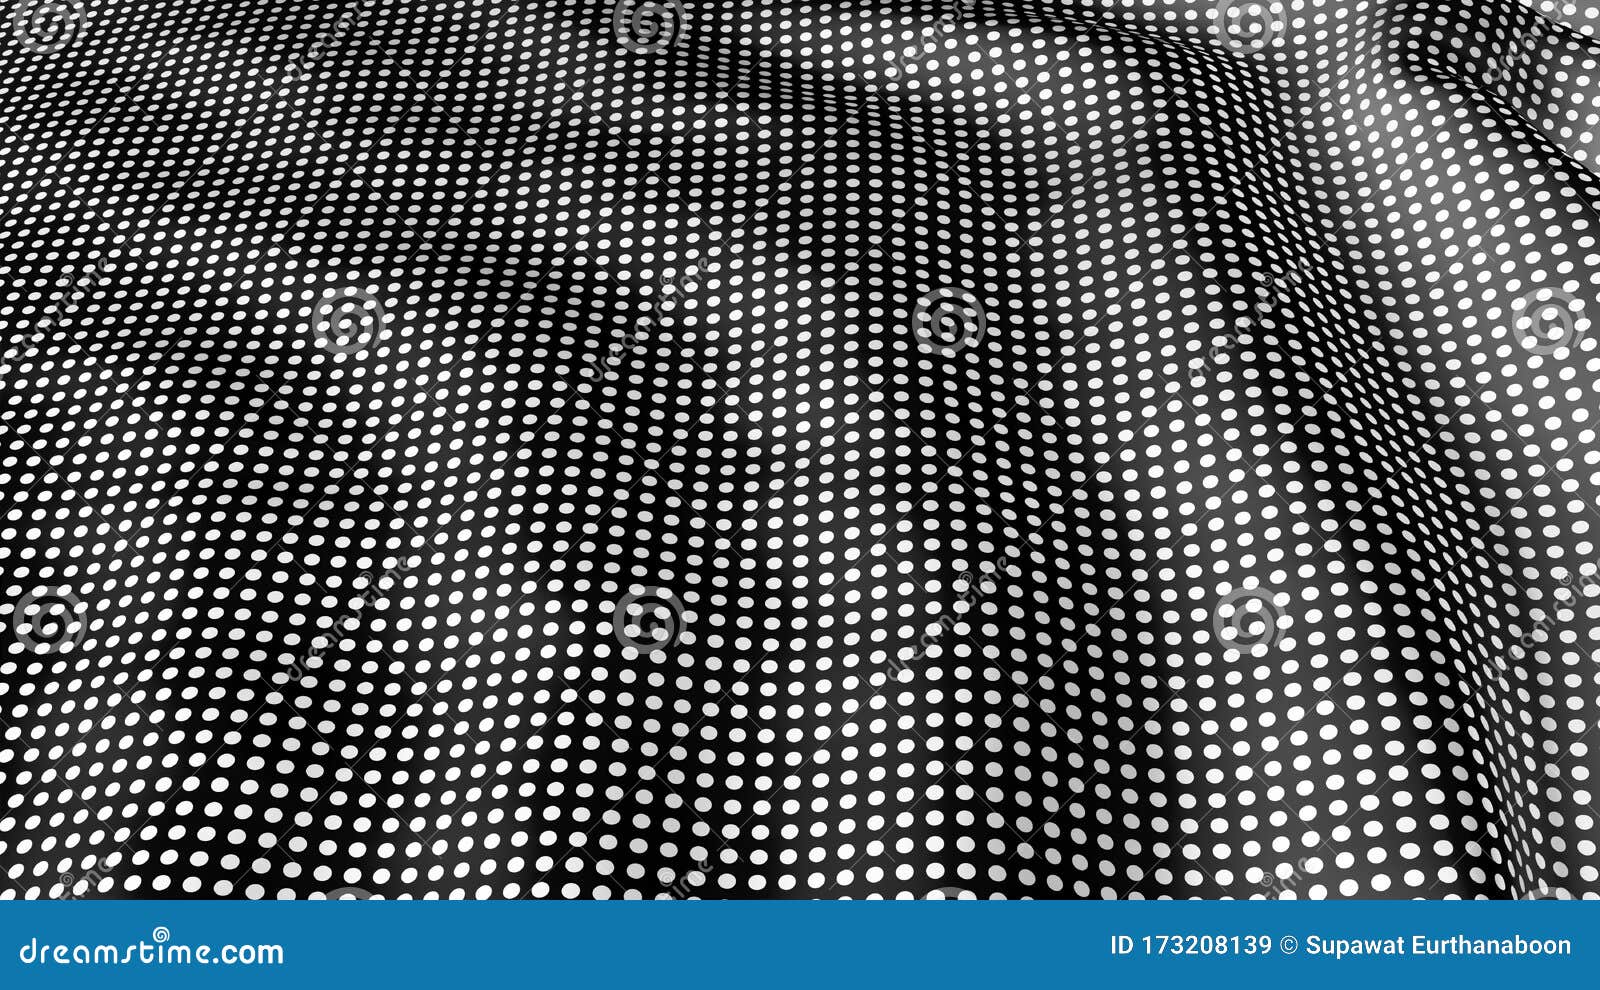 Circle Dots Pattern on Wavy Fabric Cloth. Stock Illustration ...